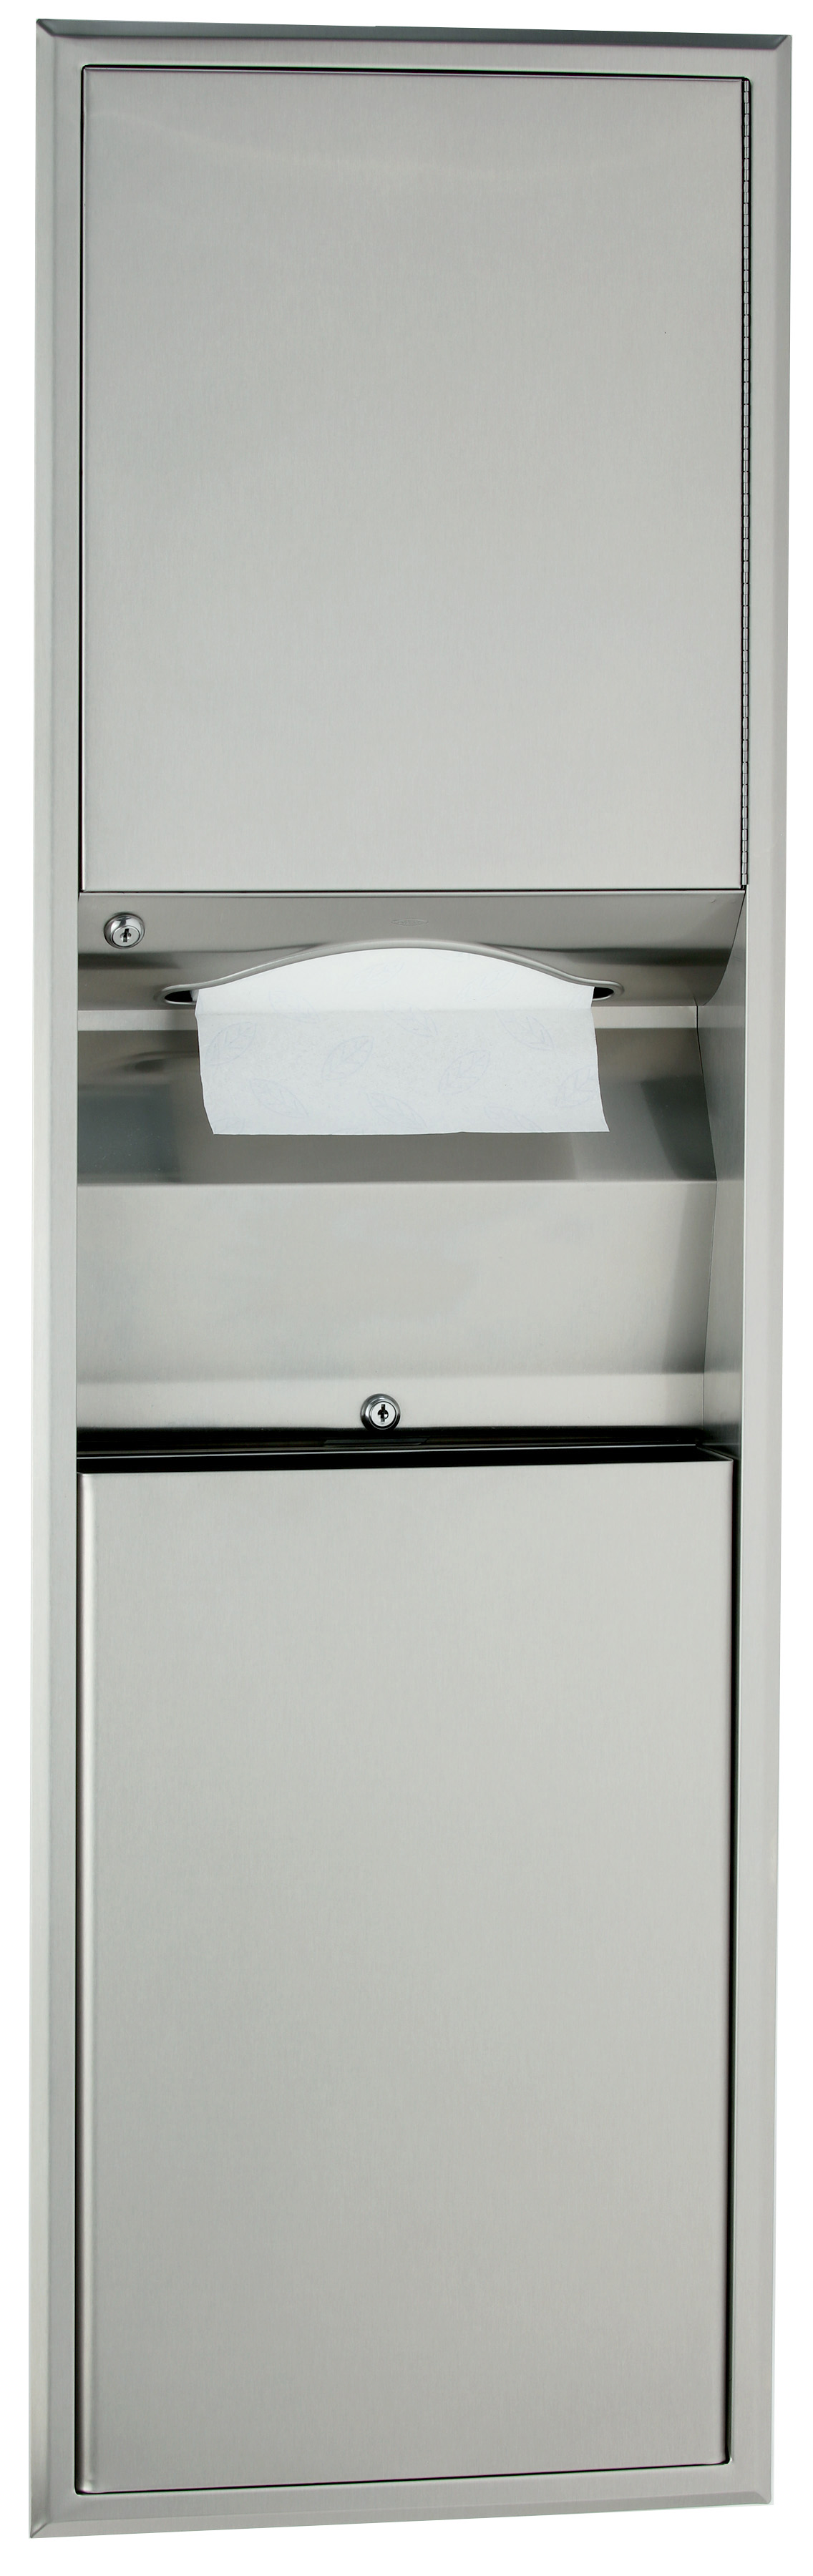 Recessed Convertible Paper Towel Dispenser/Waste Bin Image